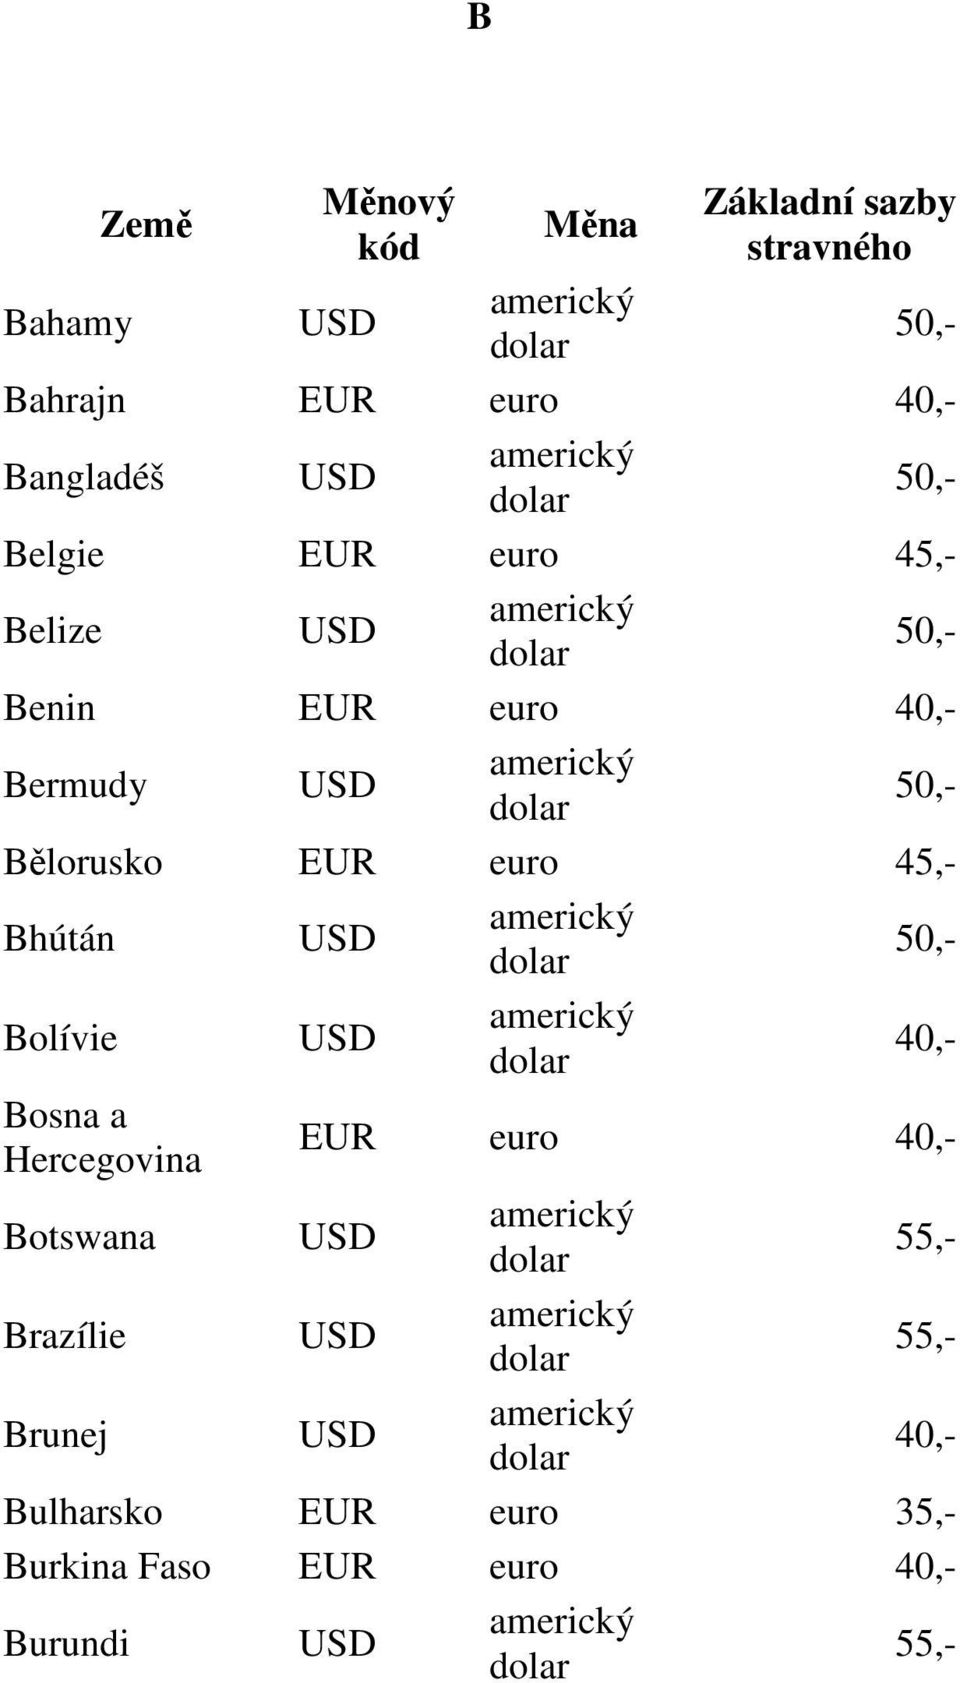 40,- Bosna a Hercegovina EUR euro 40,- Botswana Brazílie Brunej